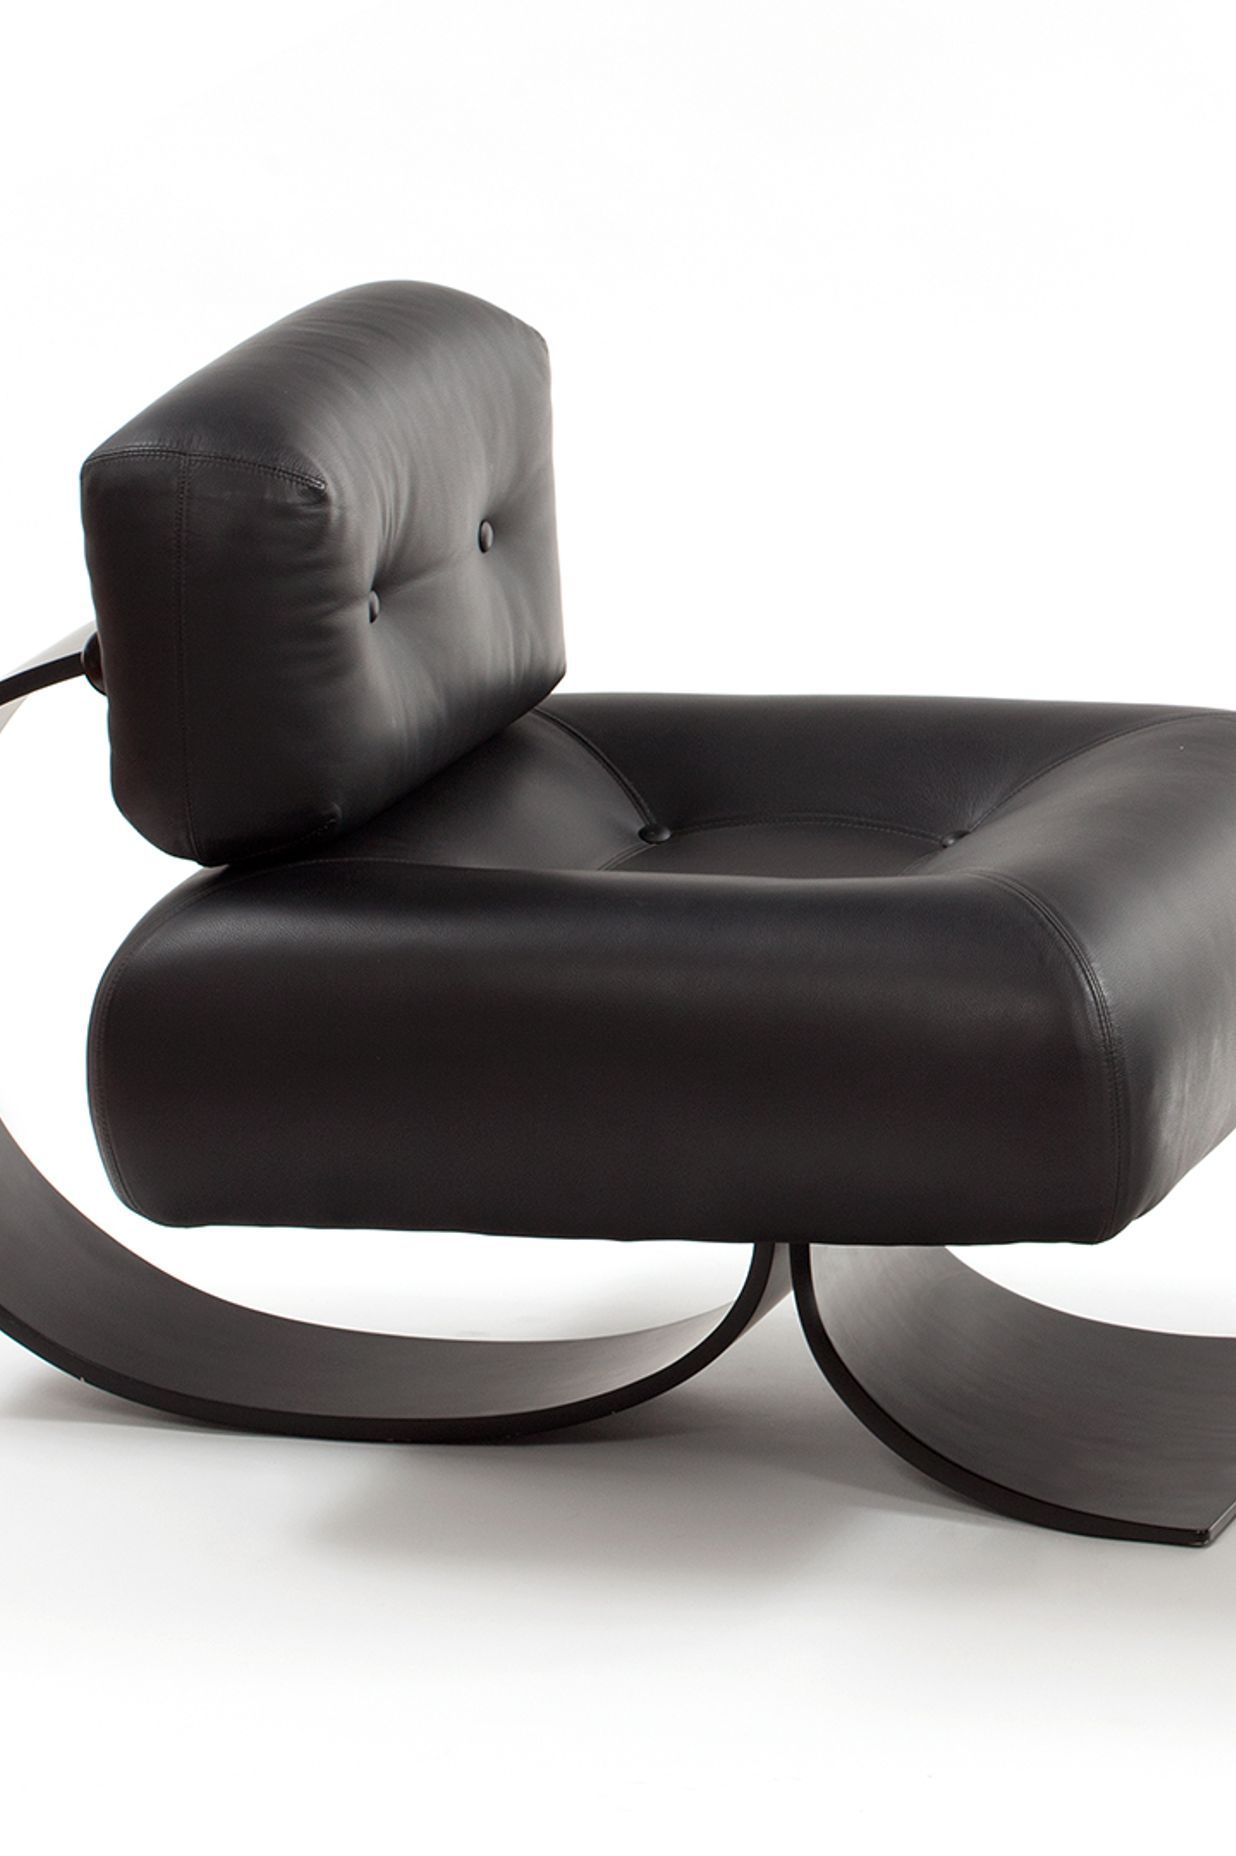 Euroluce collaborate with Brazilian furniture company Mama Casa